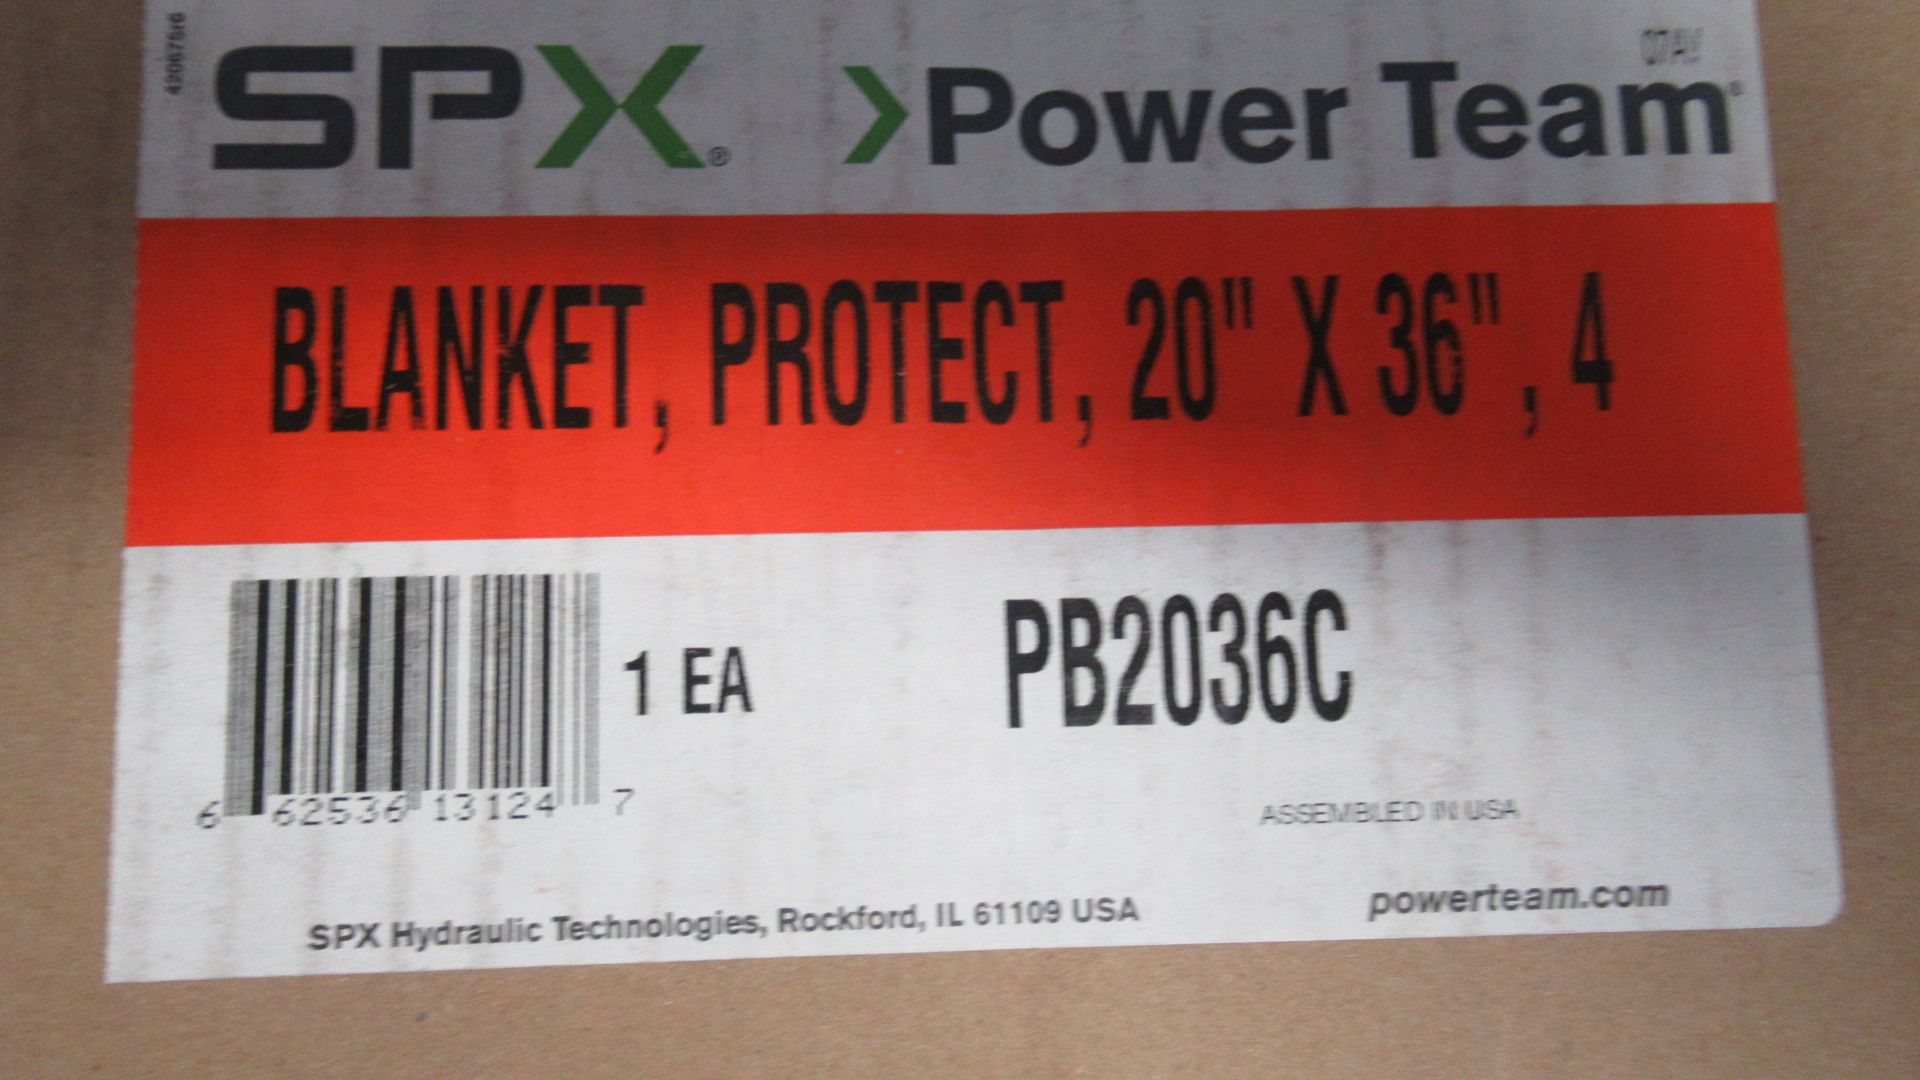 BLANKET PROTECT 20"x36" SPX PB2036C - Image 2 of 2